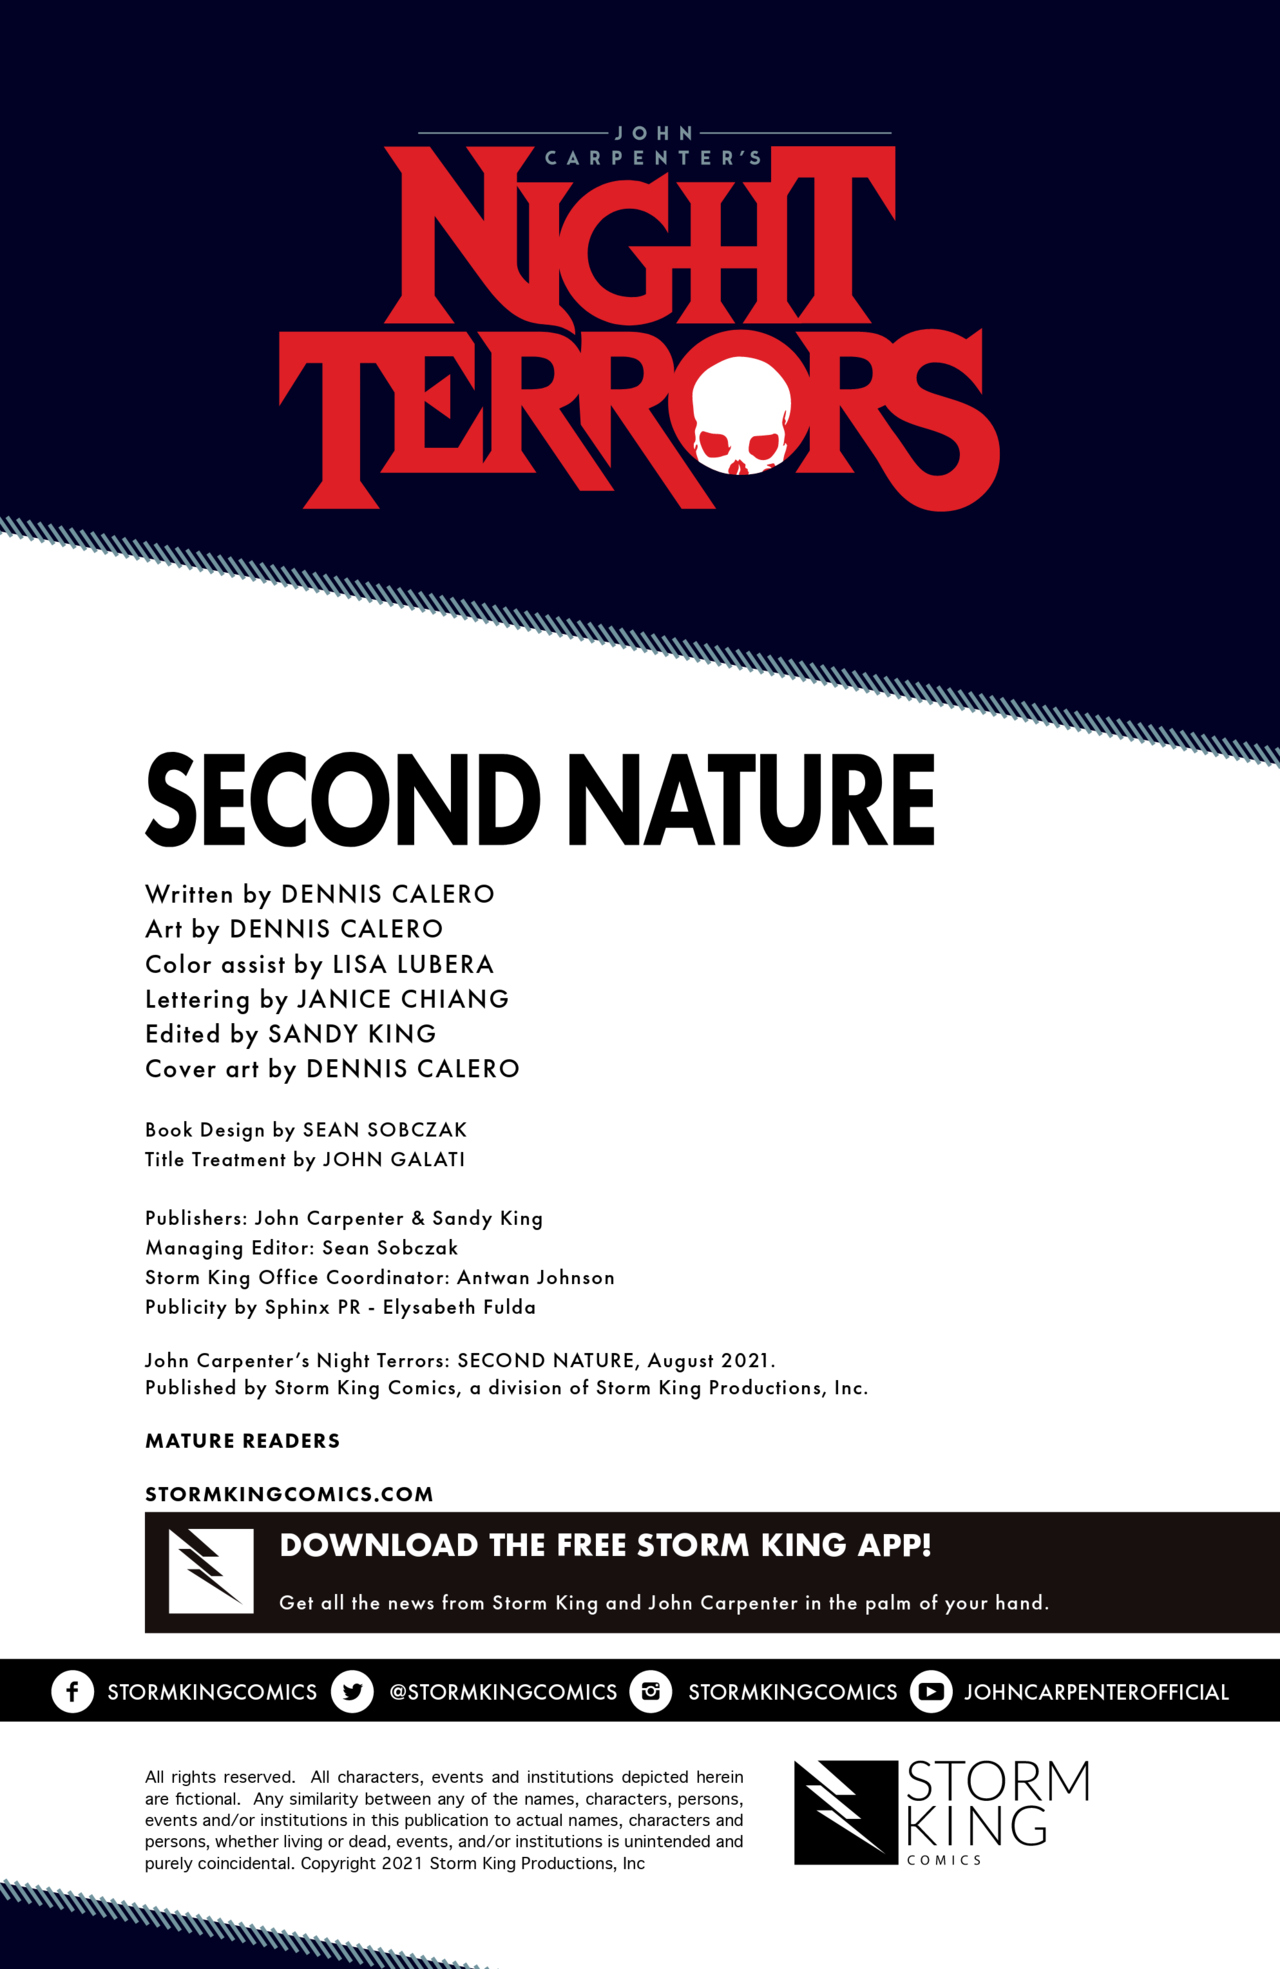 Read online John Carpenter's Night Terrors comic -  Issue # Second Nature - 4